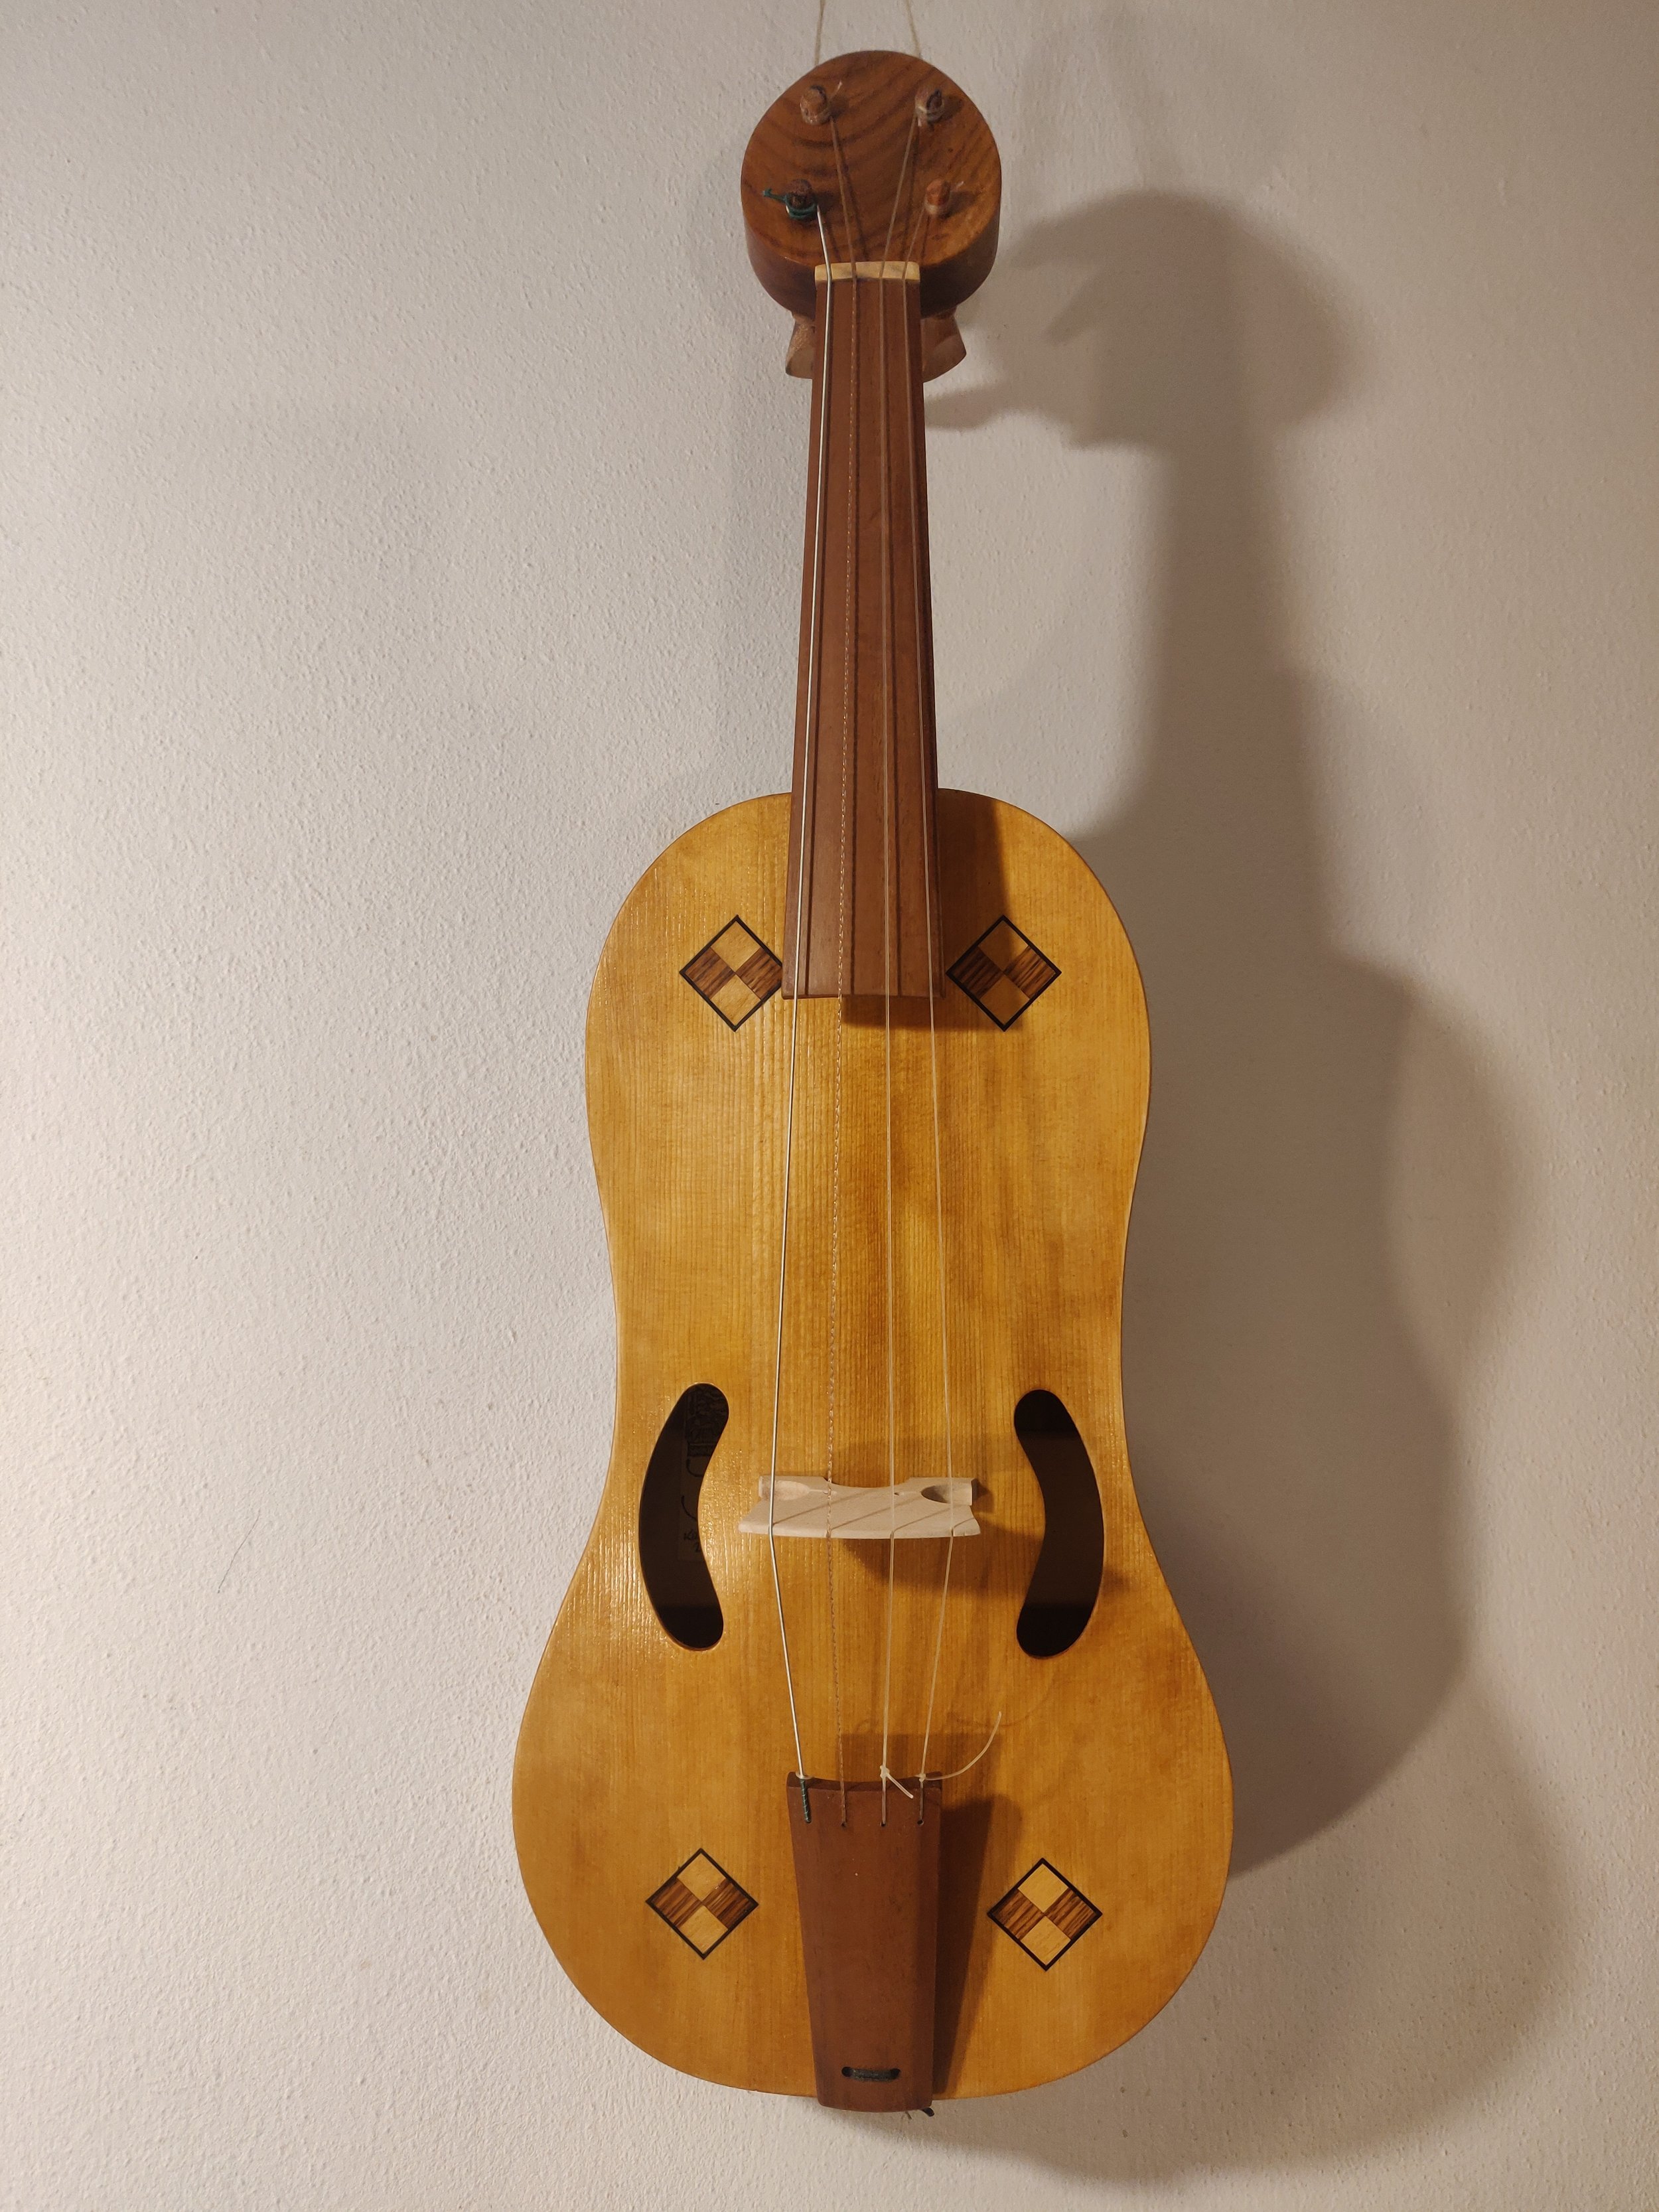 Four-String Medieval Fiddle